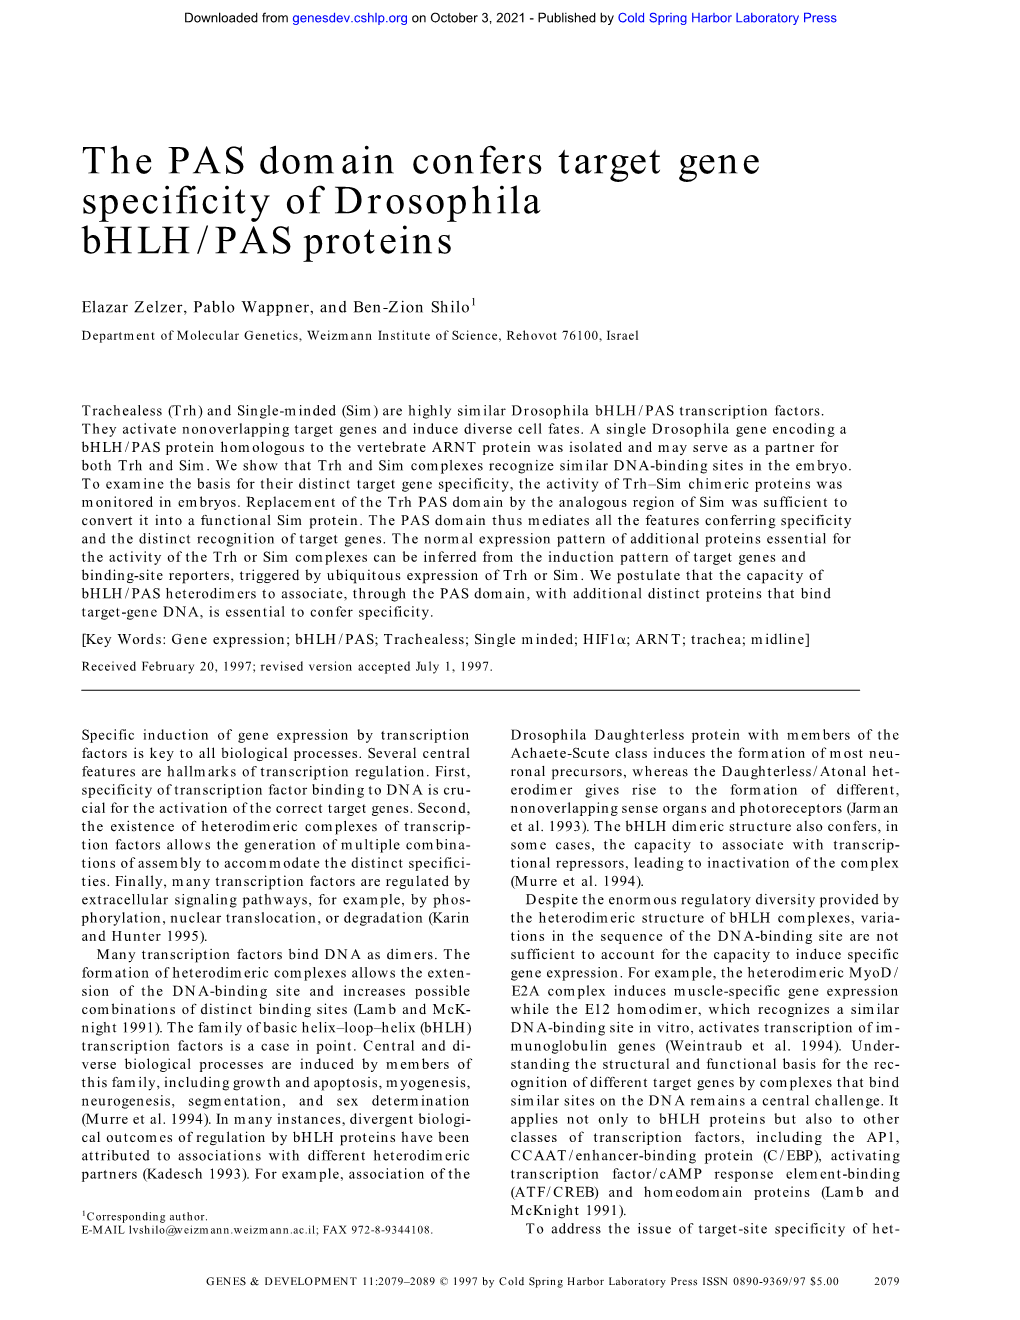 The PAS Domain Confers Target Gene Specificity of Drosophila Bhlh/PAS Proteins